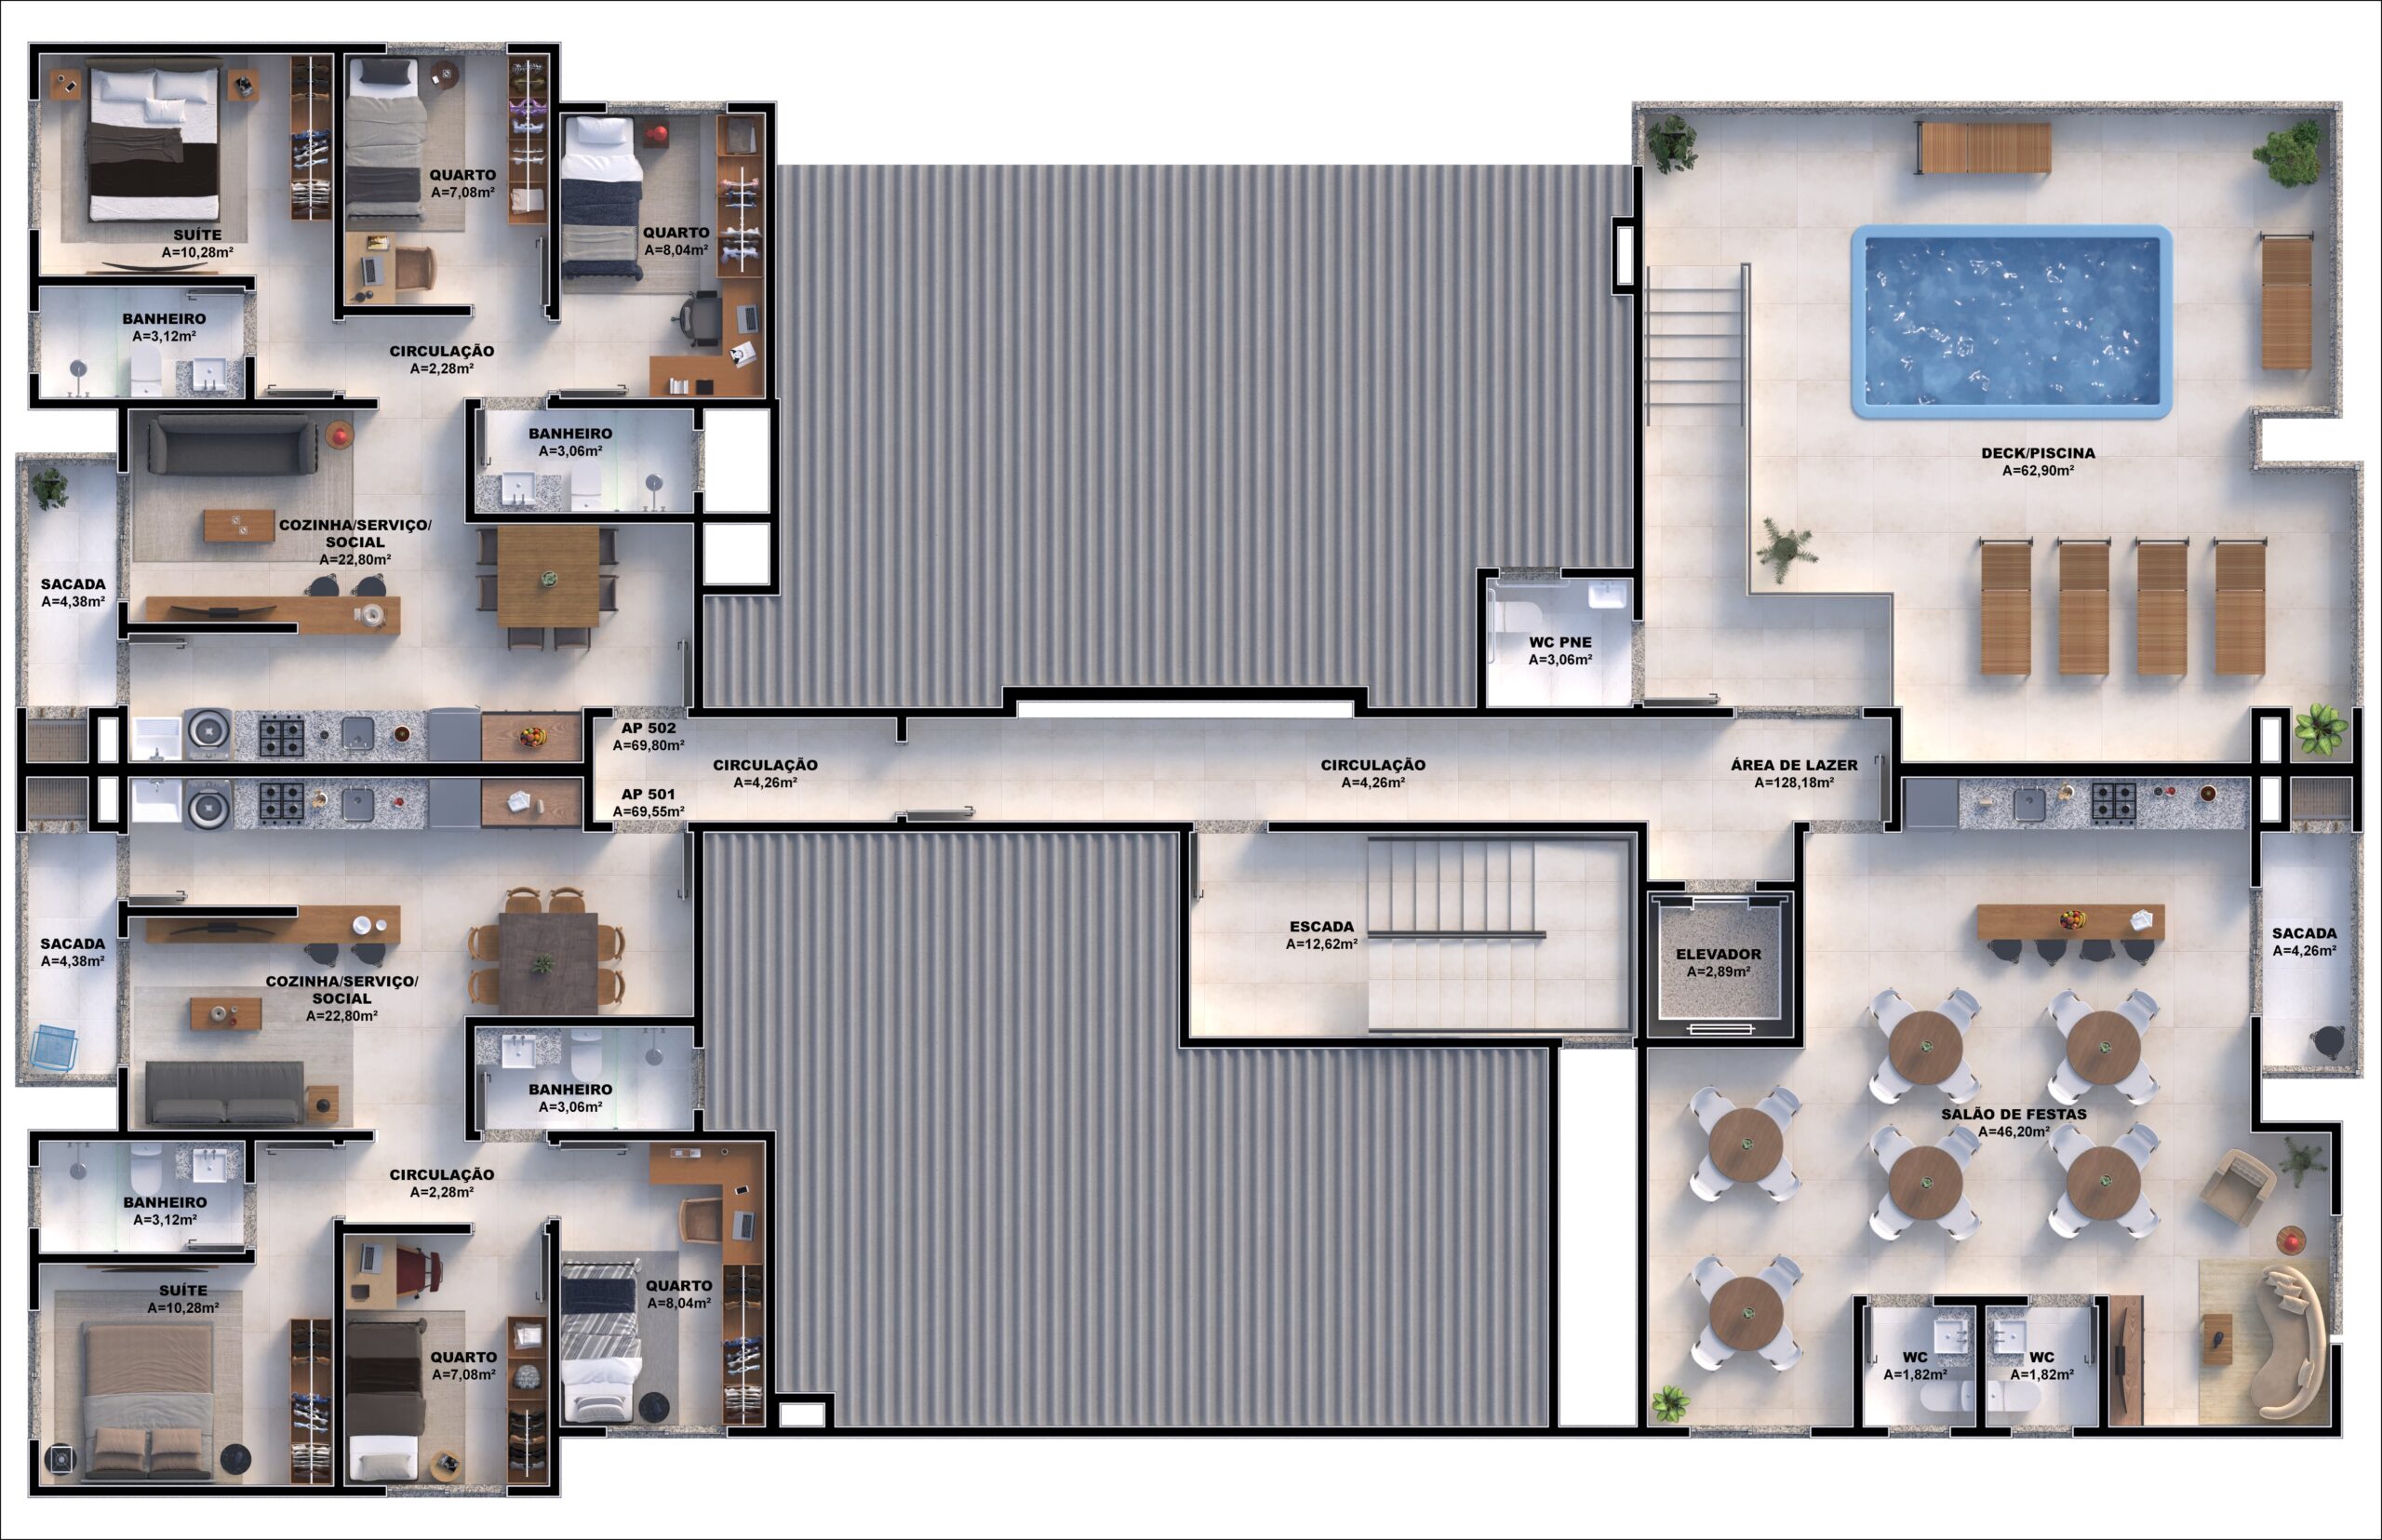 3D Floorplan of The Office : r/DunderMifflin